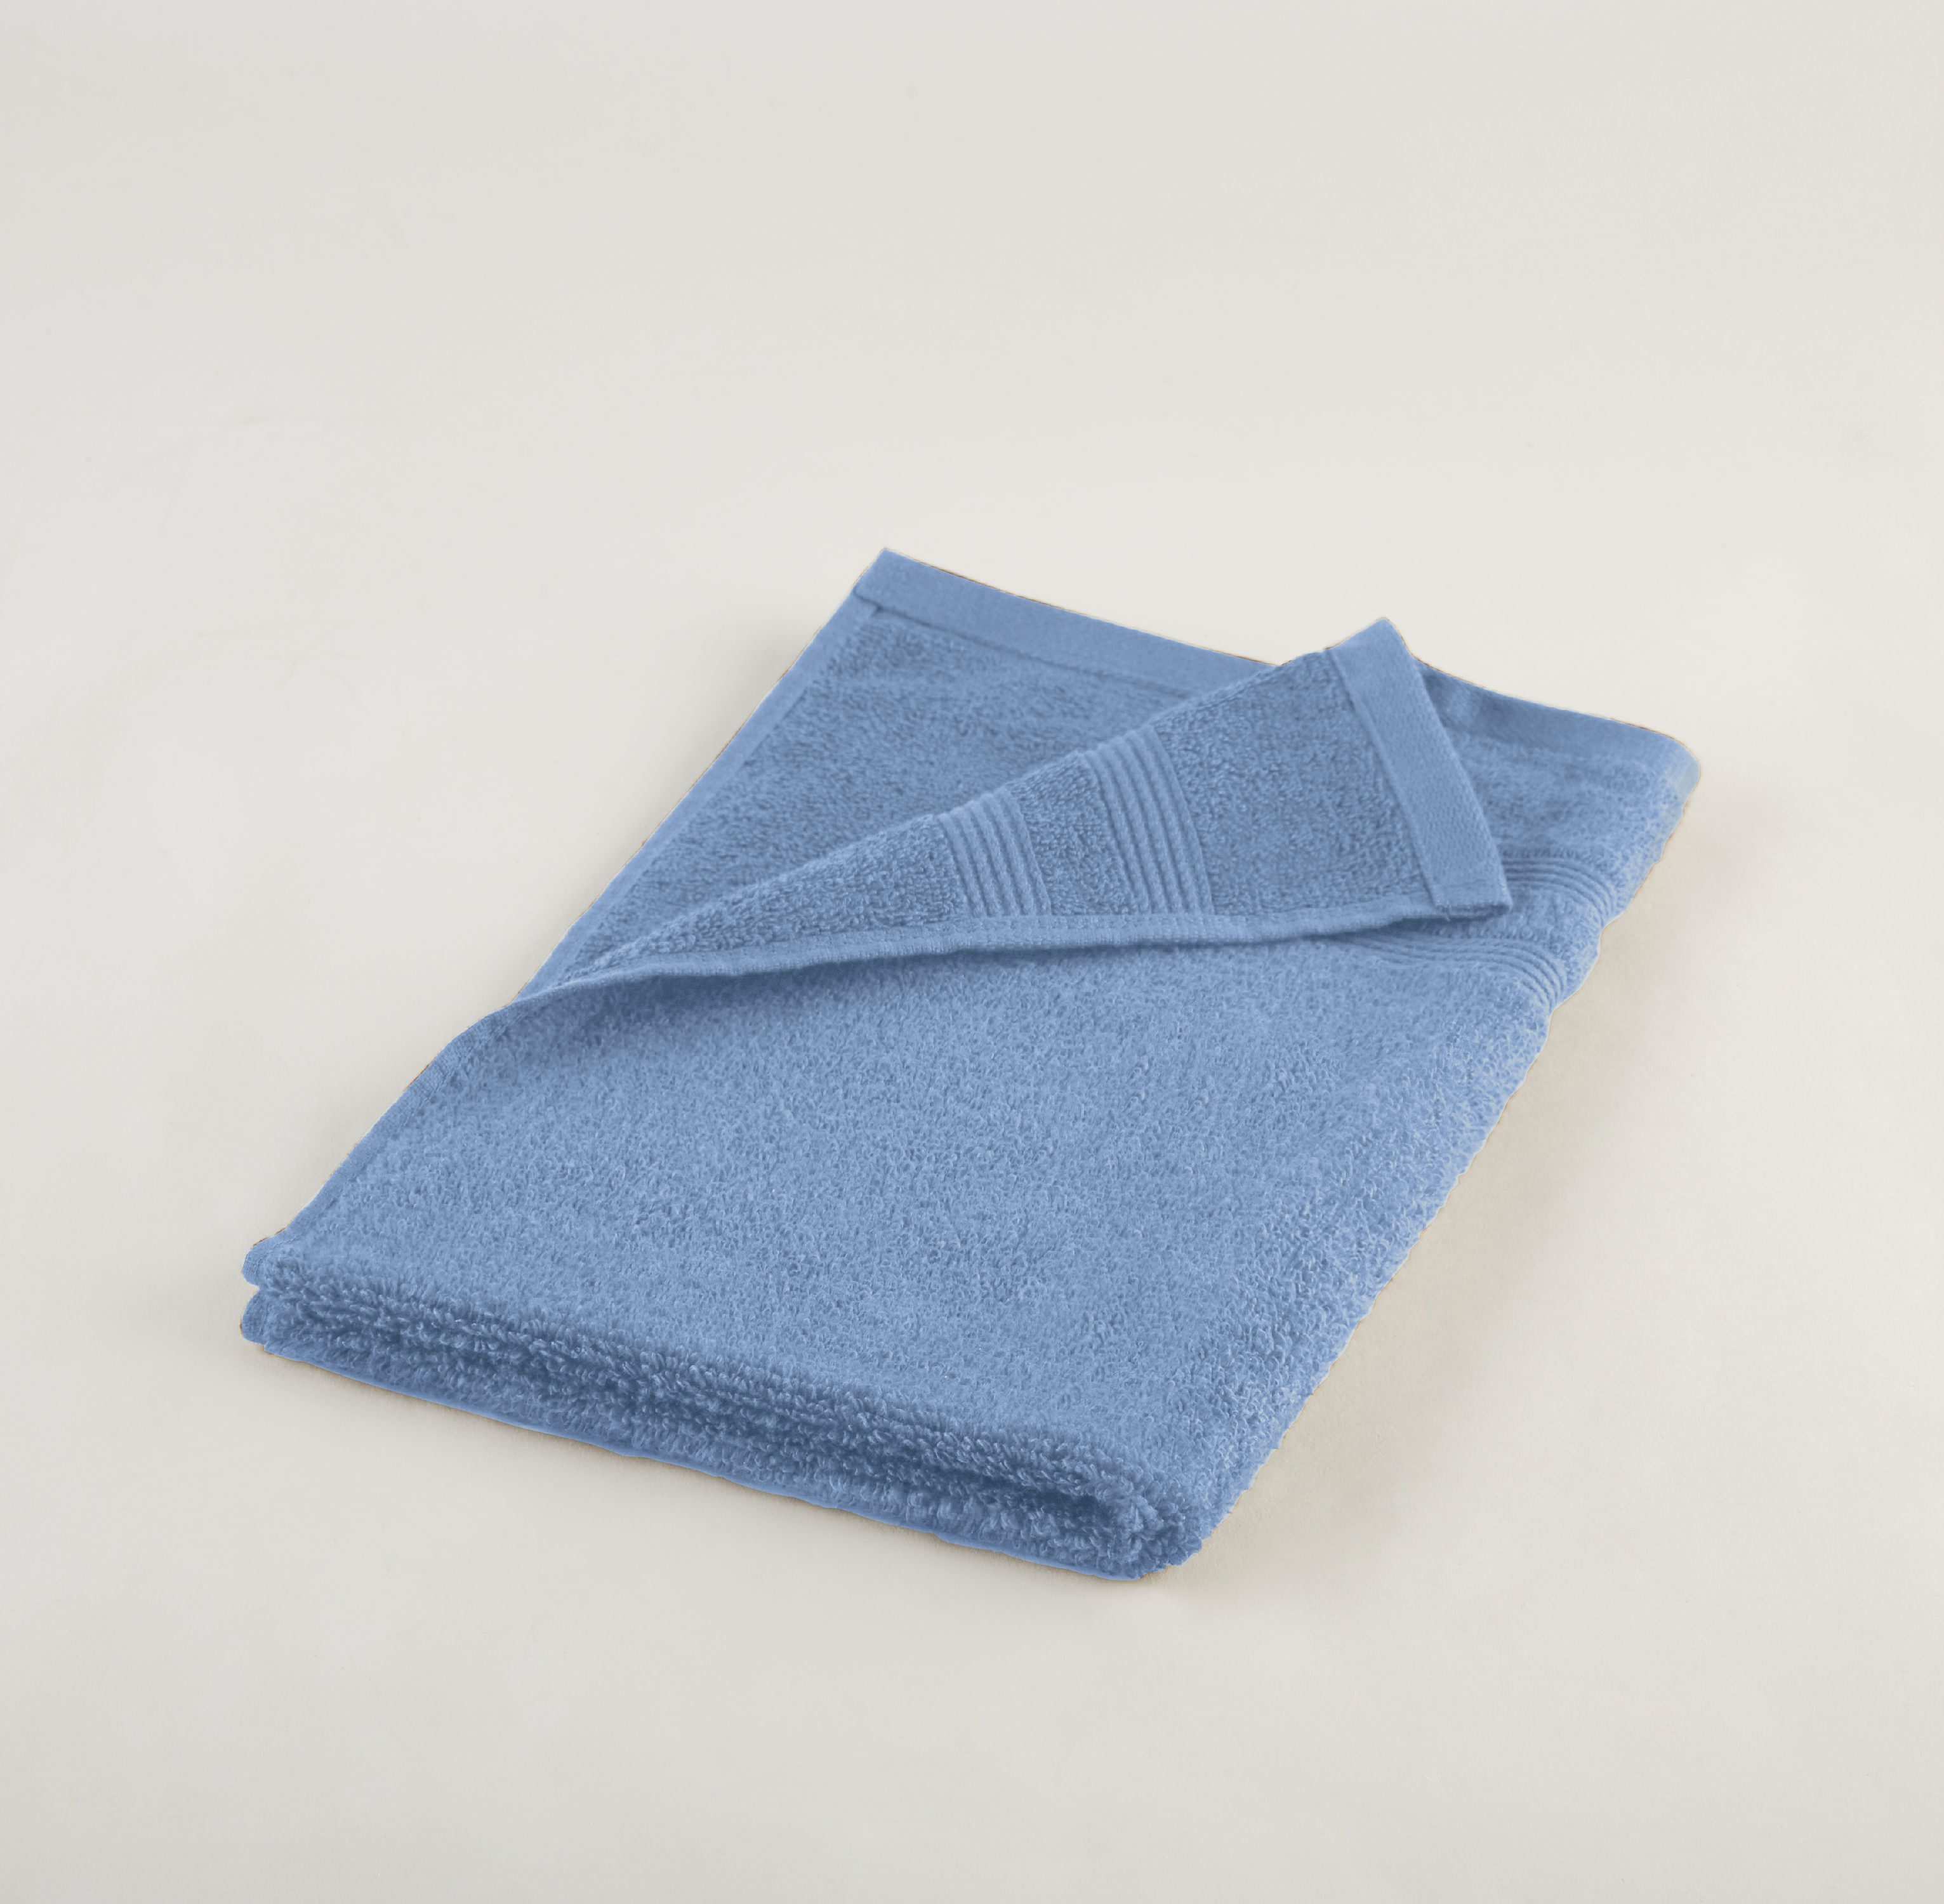 Mainstays Performance 6-Piece Towel Set, Solid Blue Linen - image 2 of 4